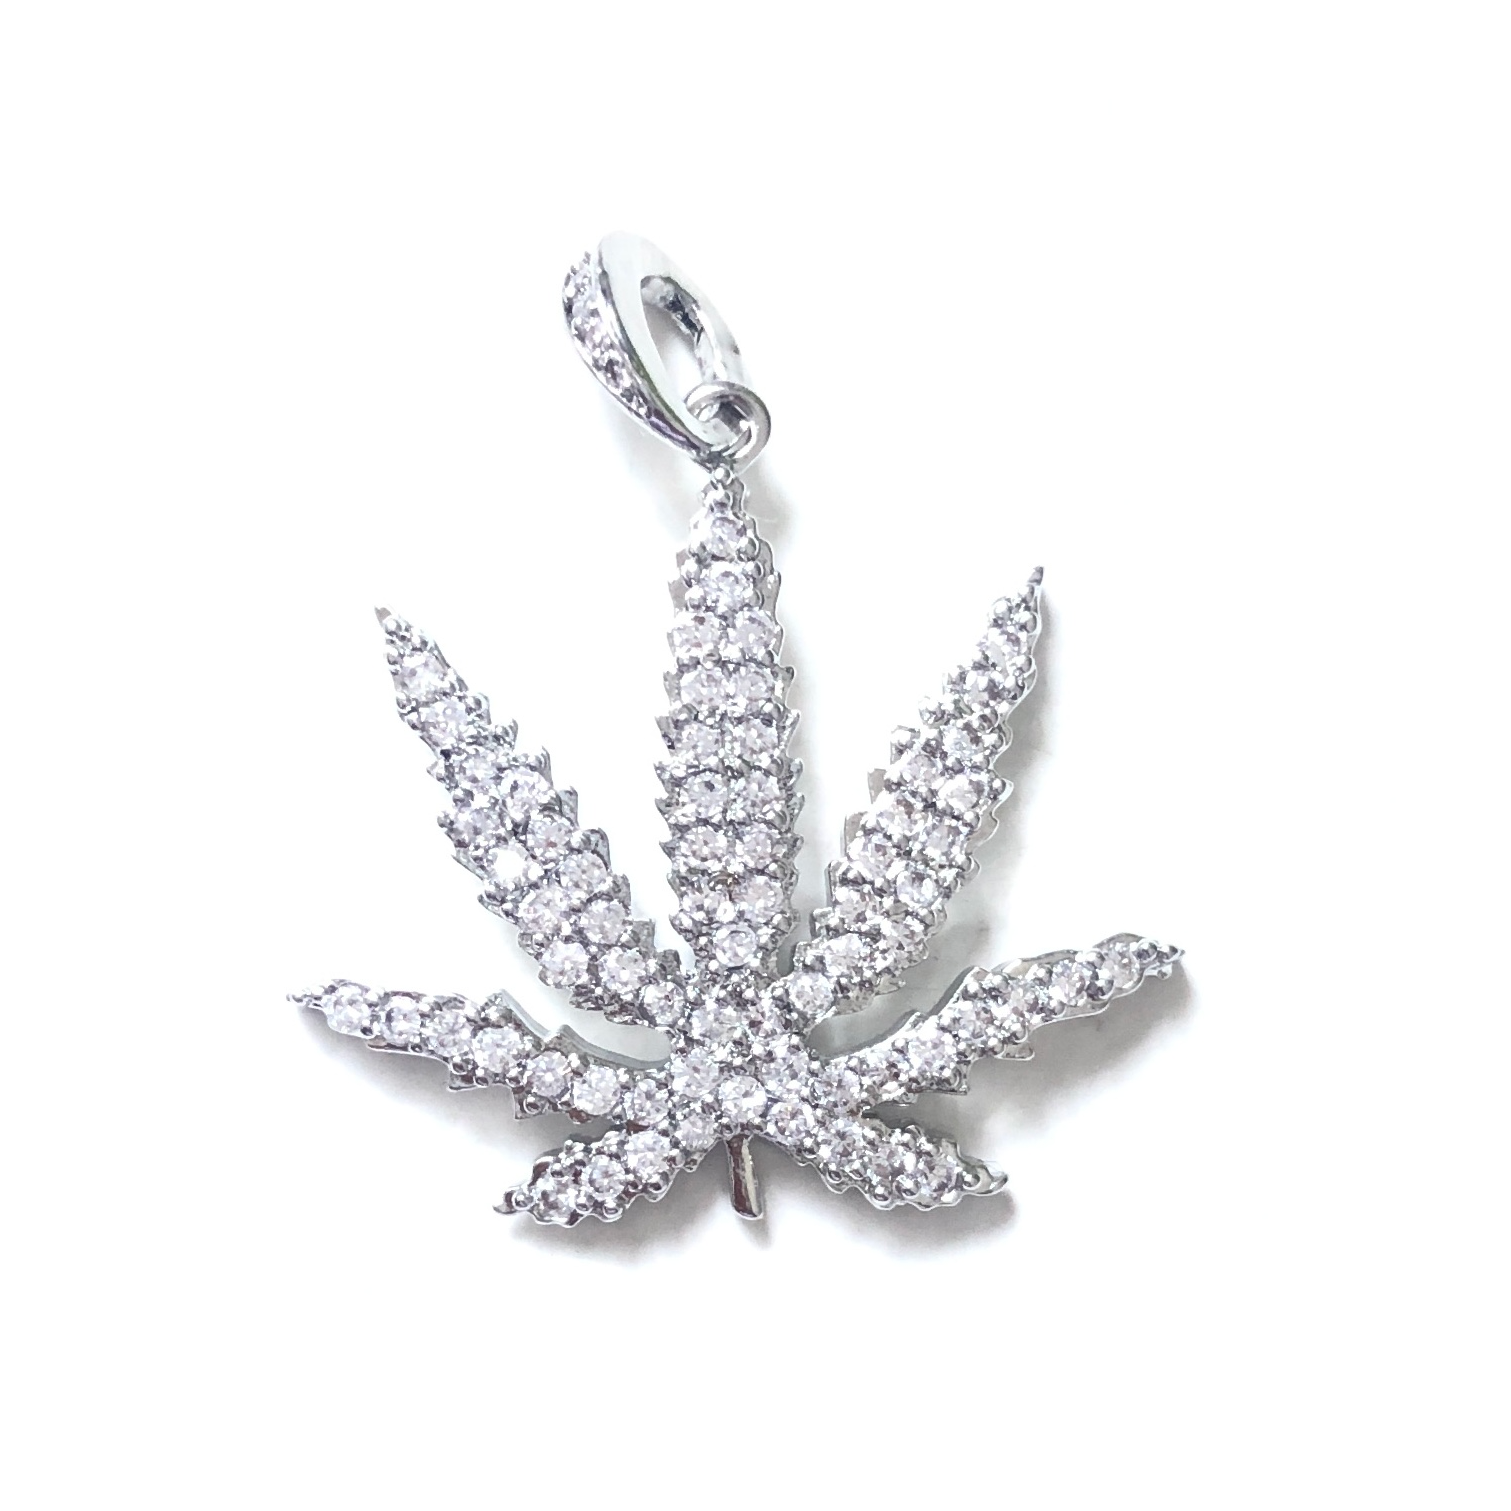 10pcs/lot 25*21.5mm CZ Paved Cannabis Leaf Plant Charms Silver CZ Paved Charms Flowers Charms Beads Beyond